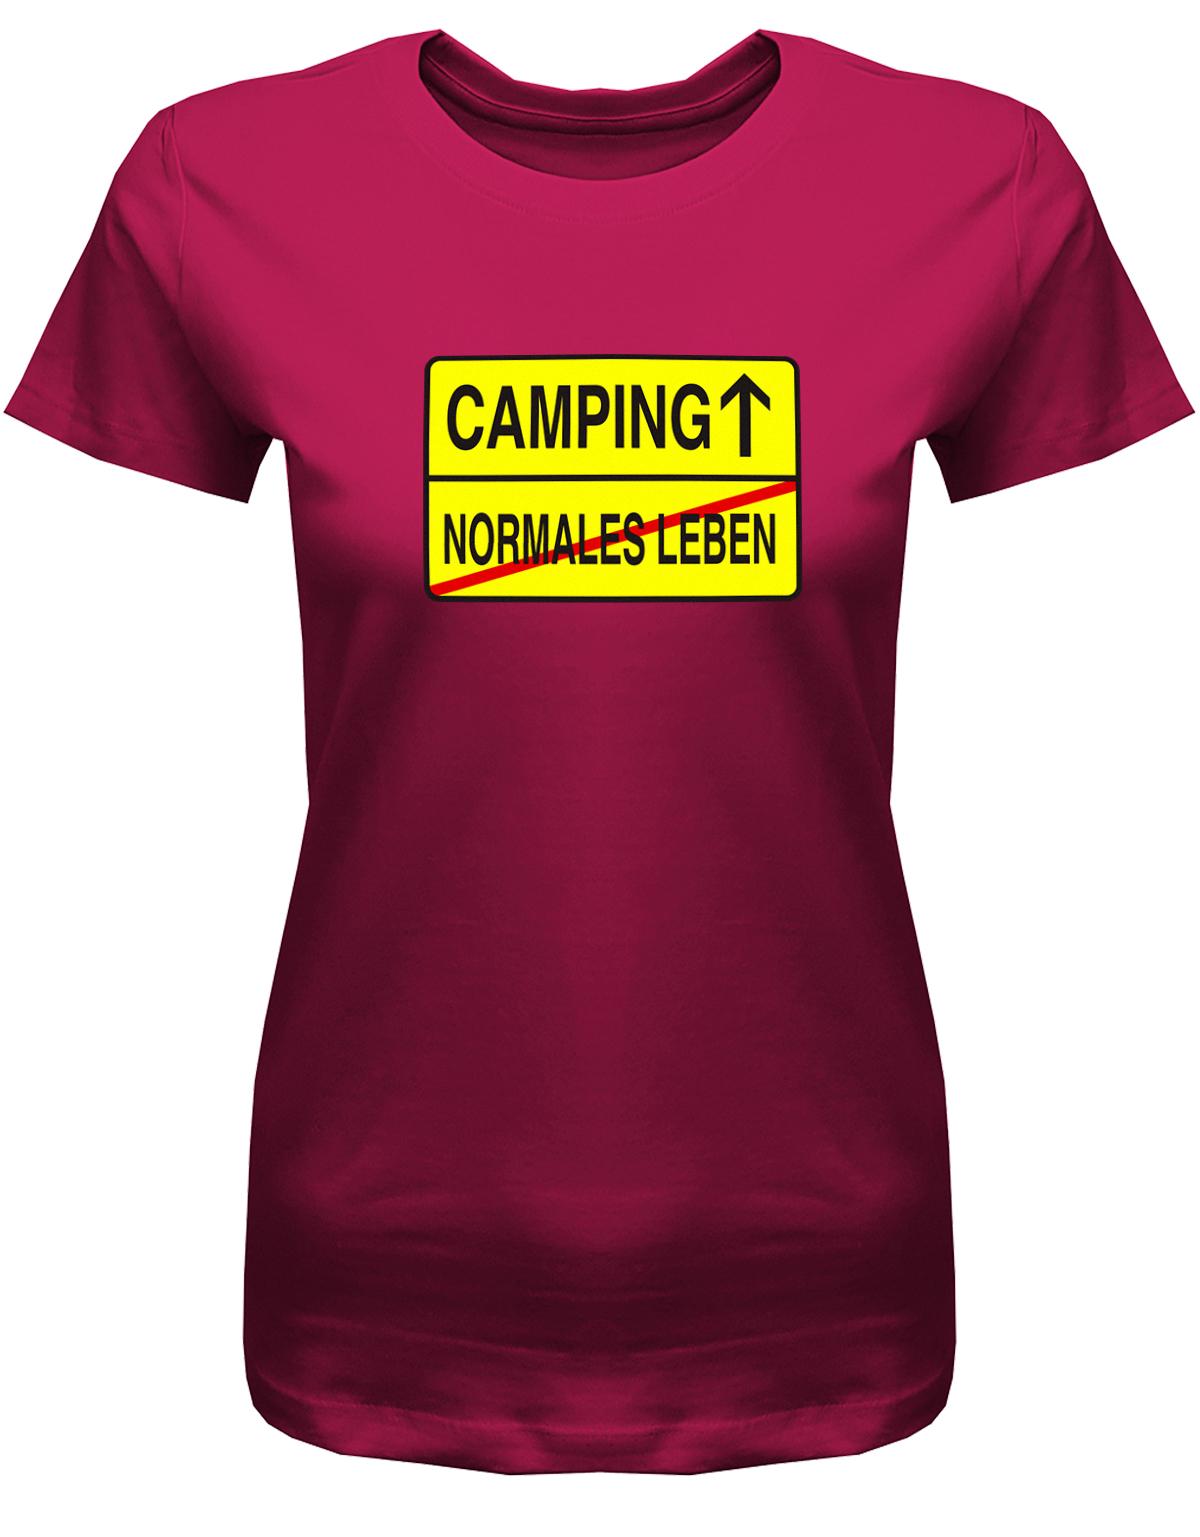 Camping-Normales-leben-Ortschild-Damen-Camping-Shirt-Sorbet